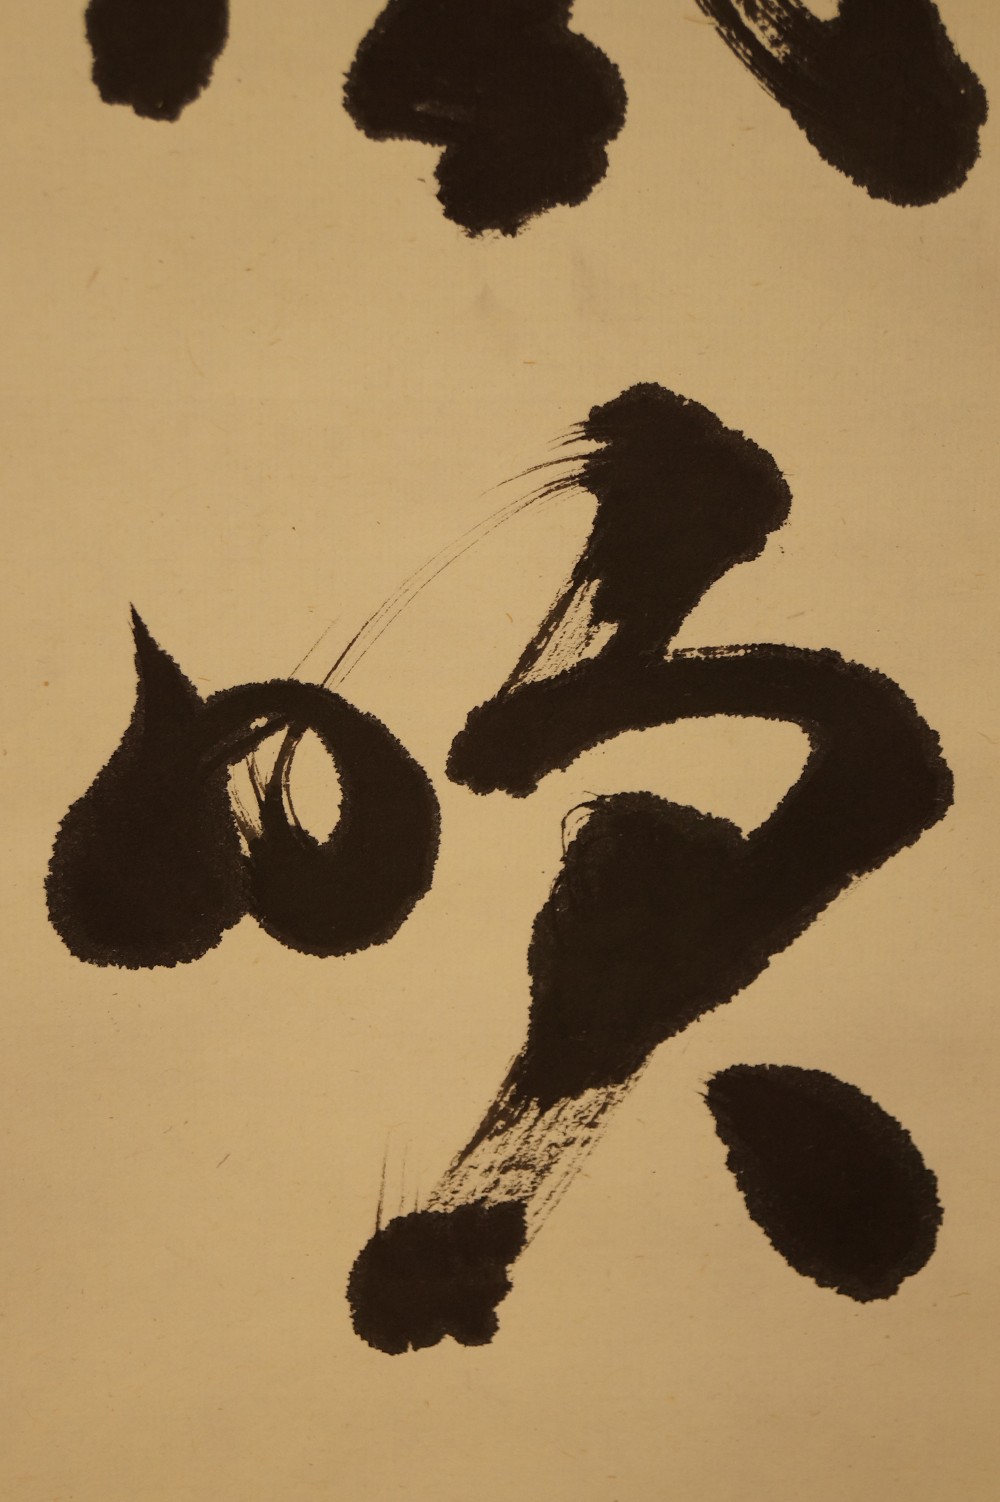 Kalligrafie - Japanisches Rollgemälde (Kakejiku, Kakemono)